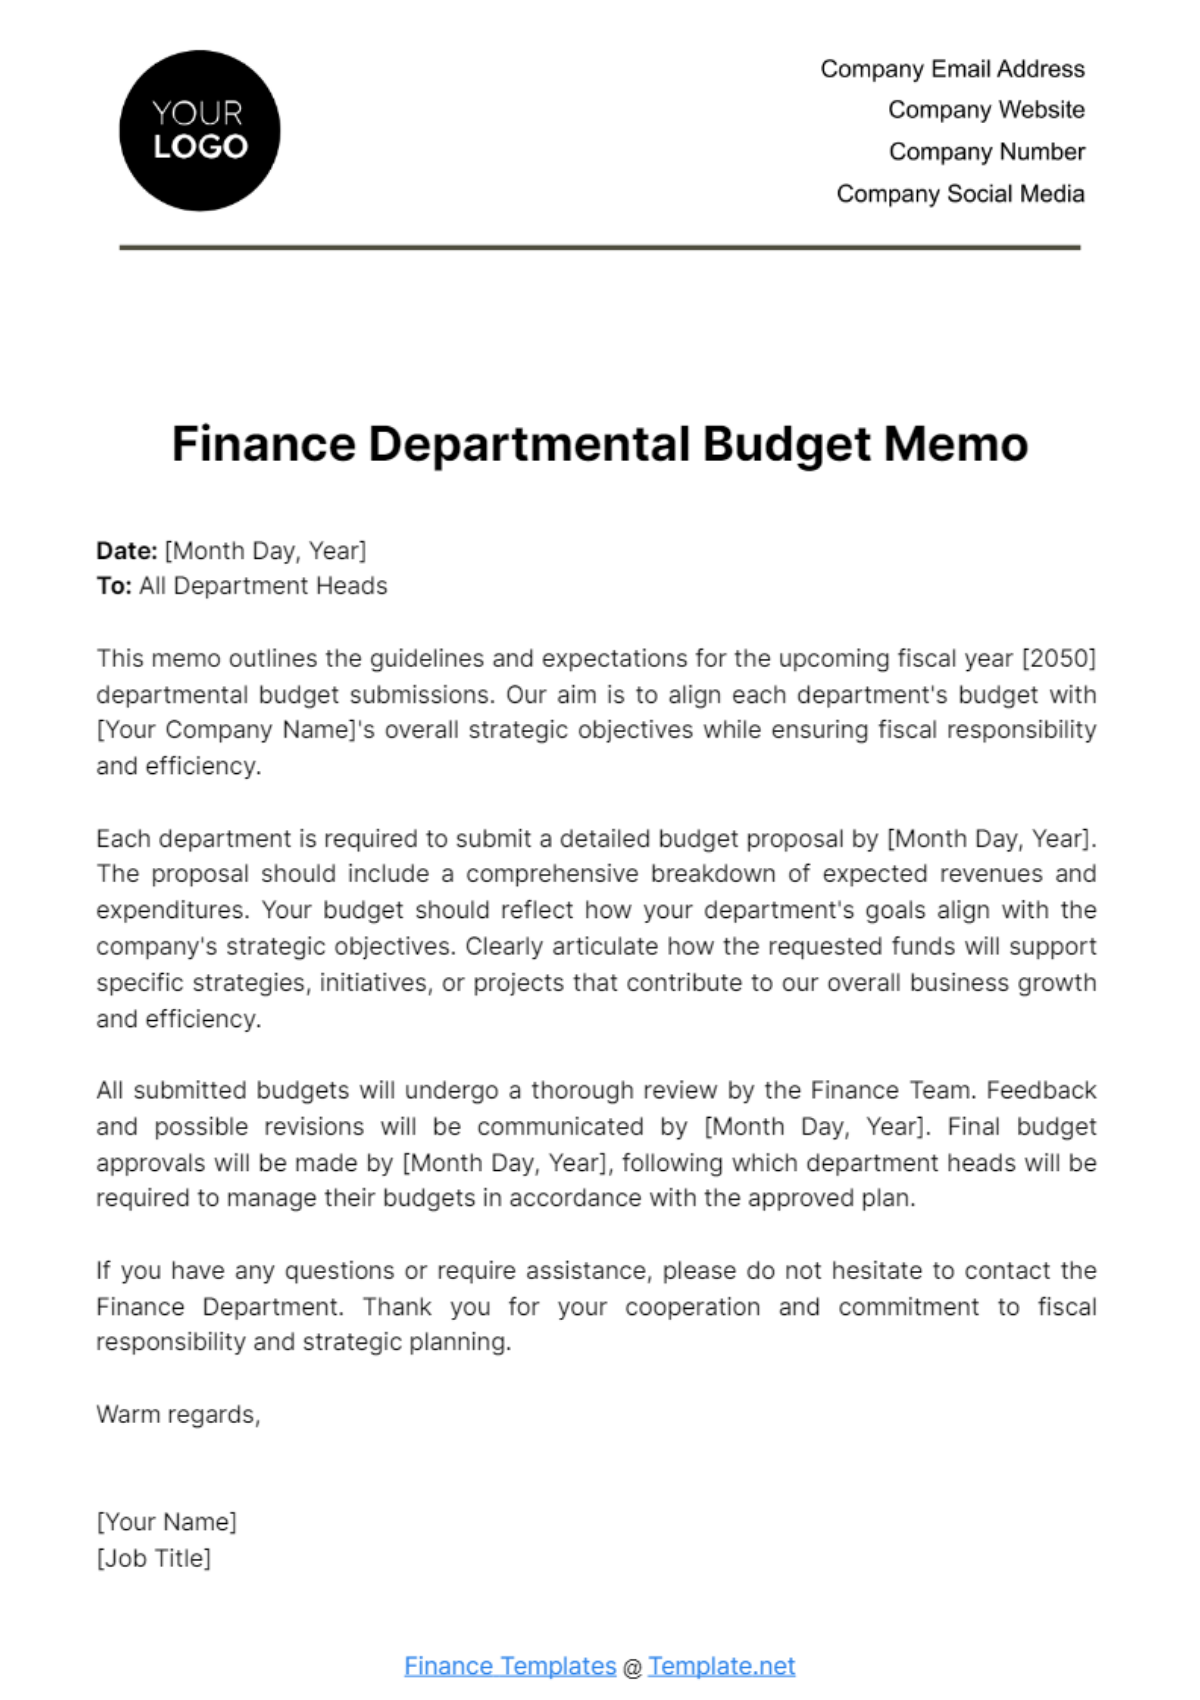 Free Finance Departmental Budget Memo Template